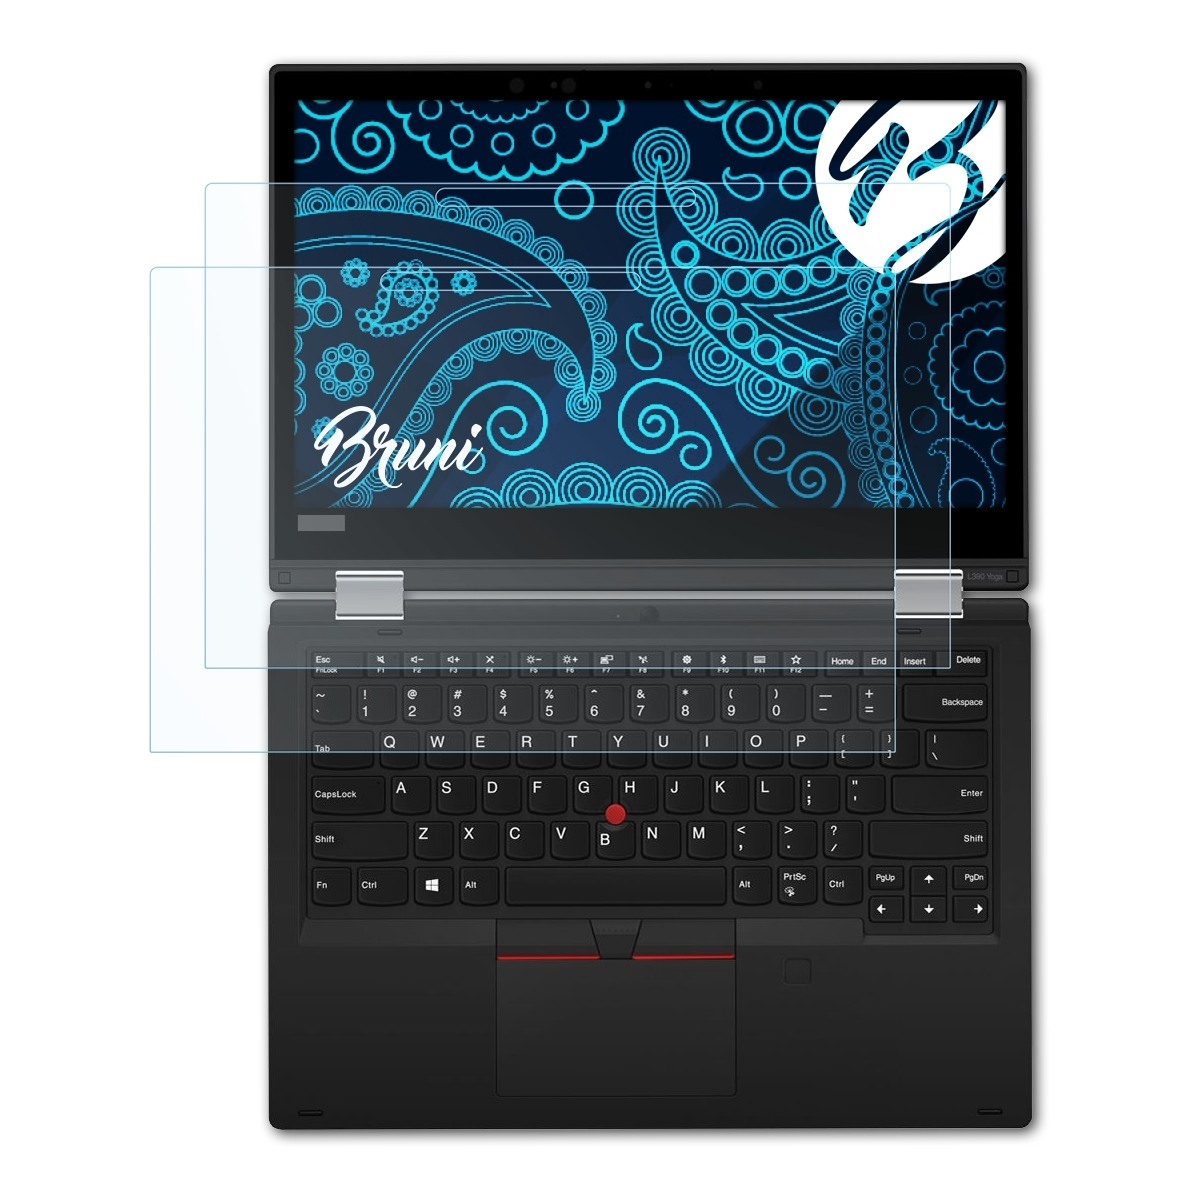 BRUNI 2x Basics-Clear Schutzfolie(für Lenovo Yoga) ThinkPad L390